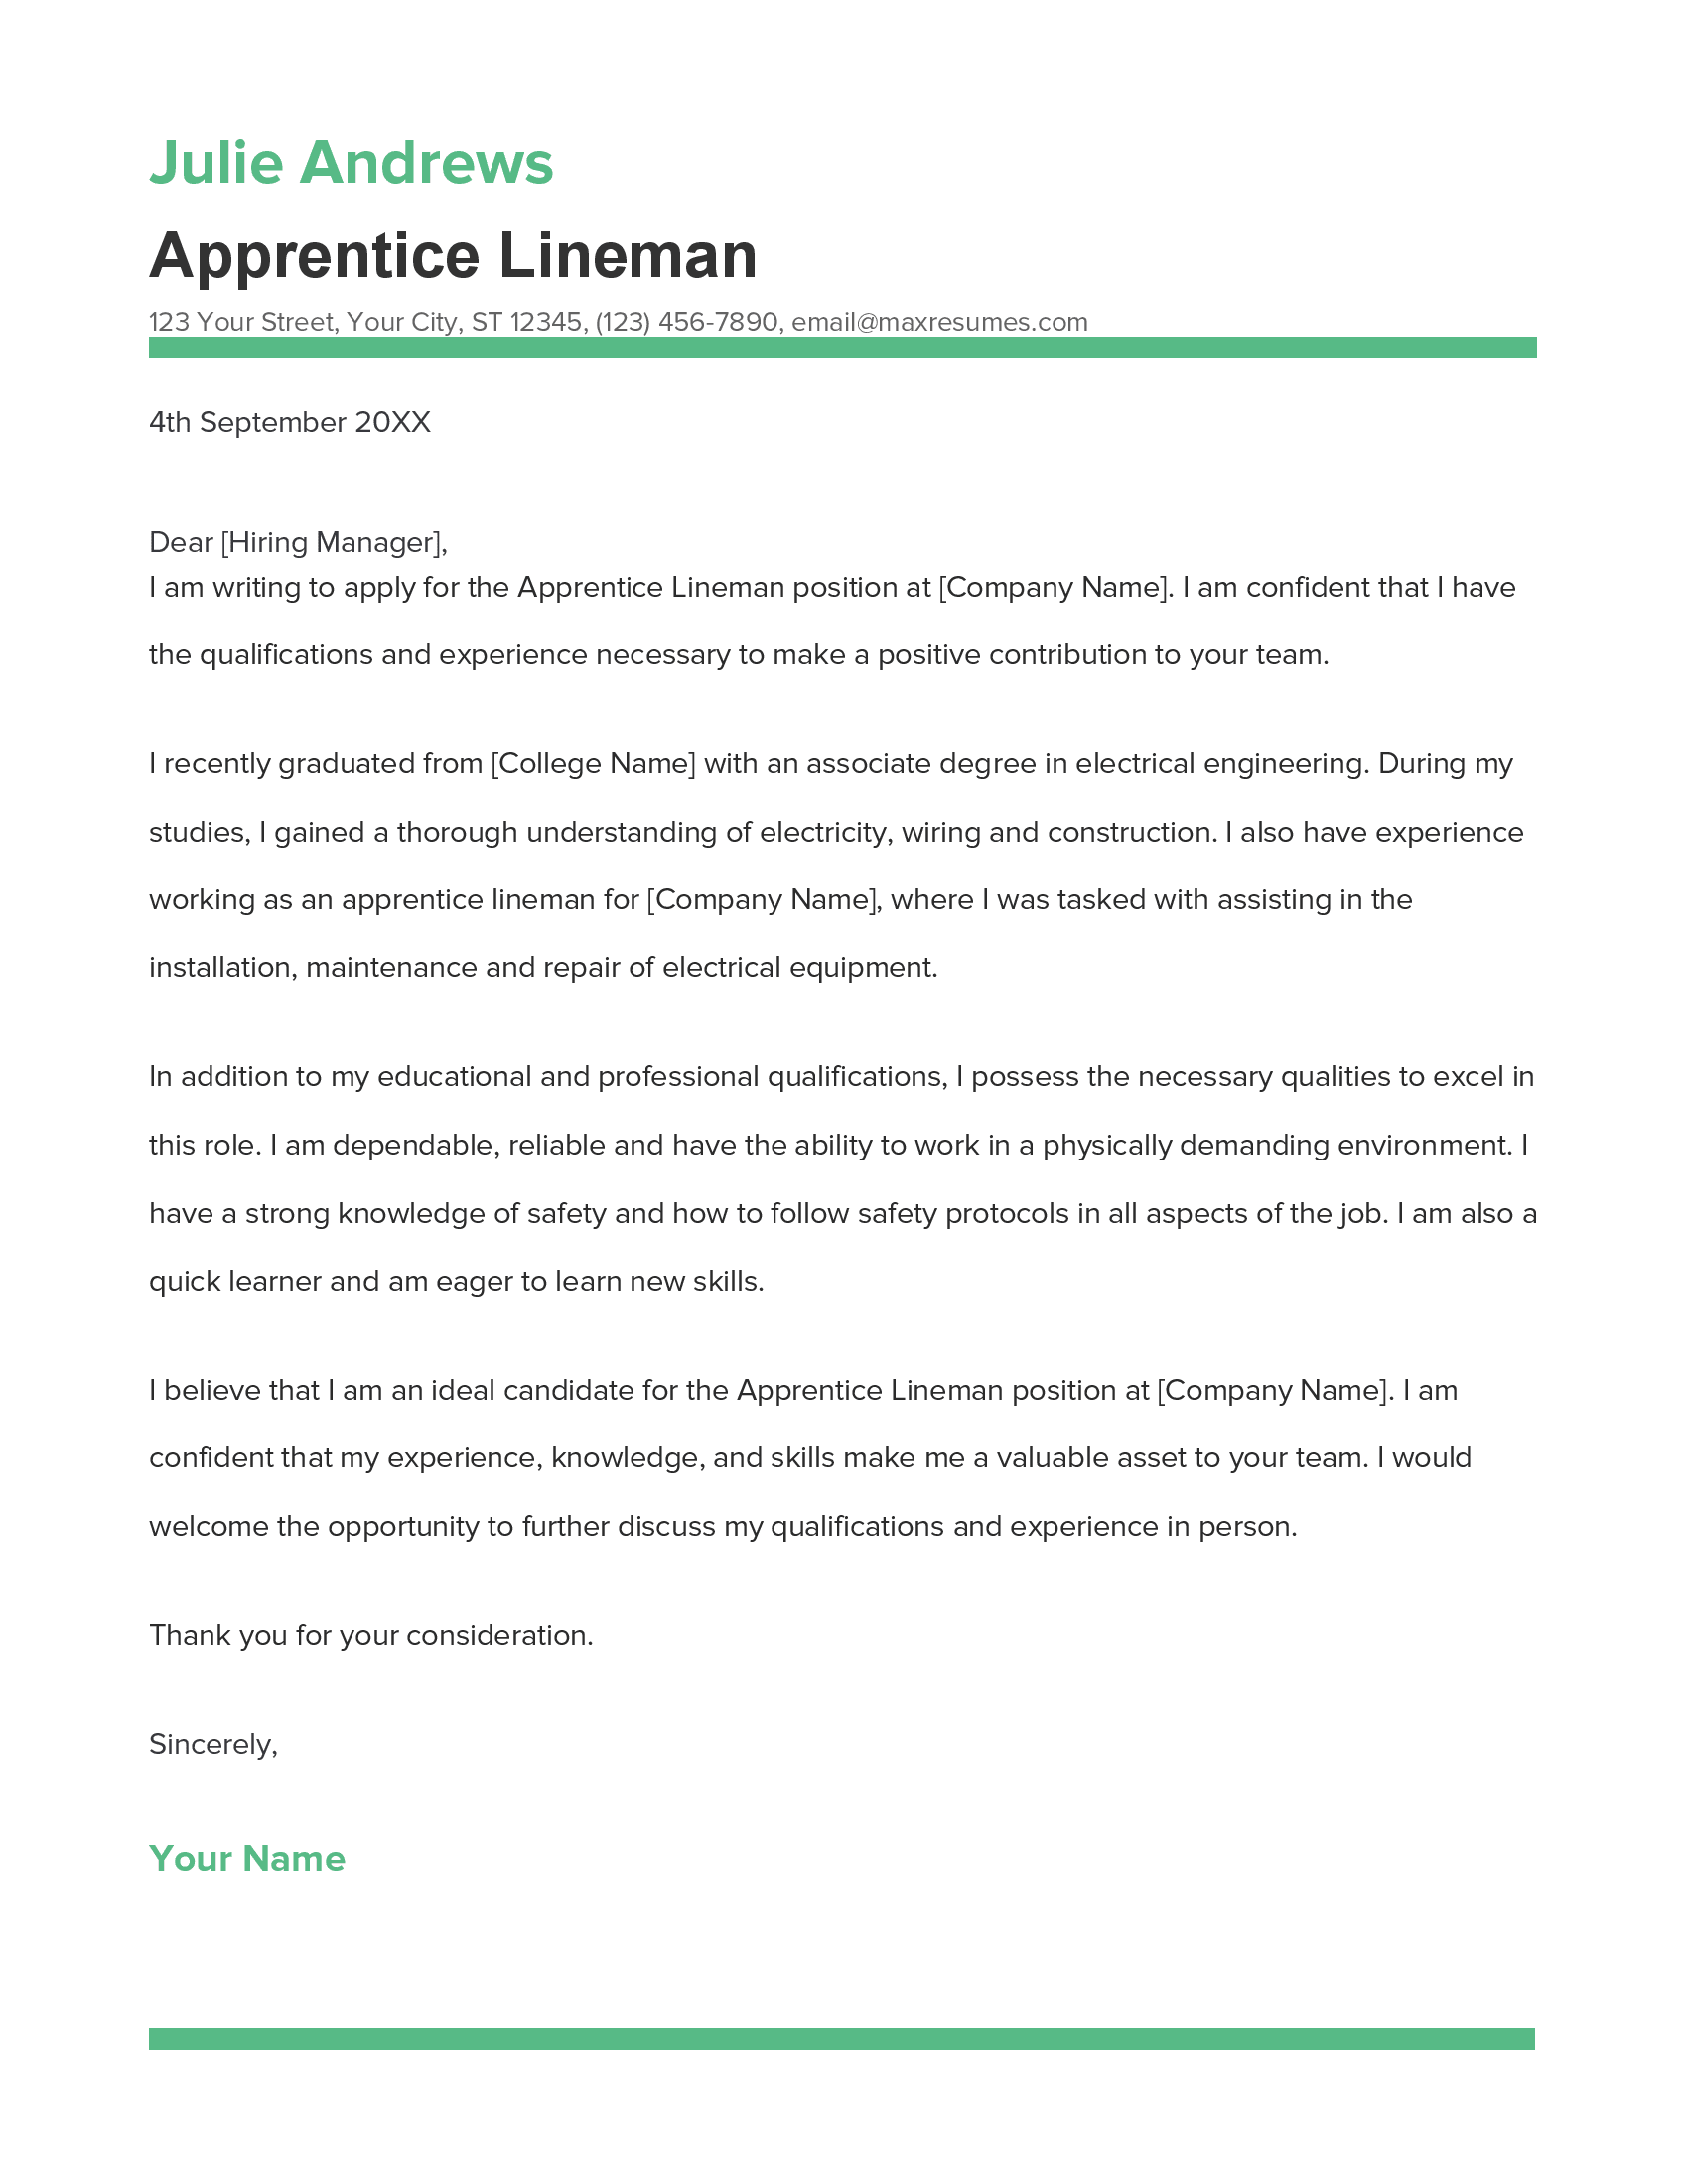 Apprentice Lineman Cover Letter Example